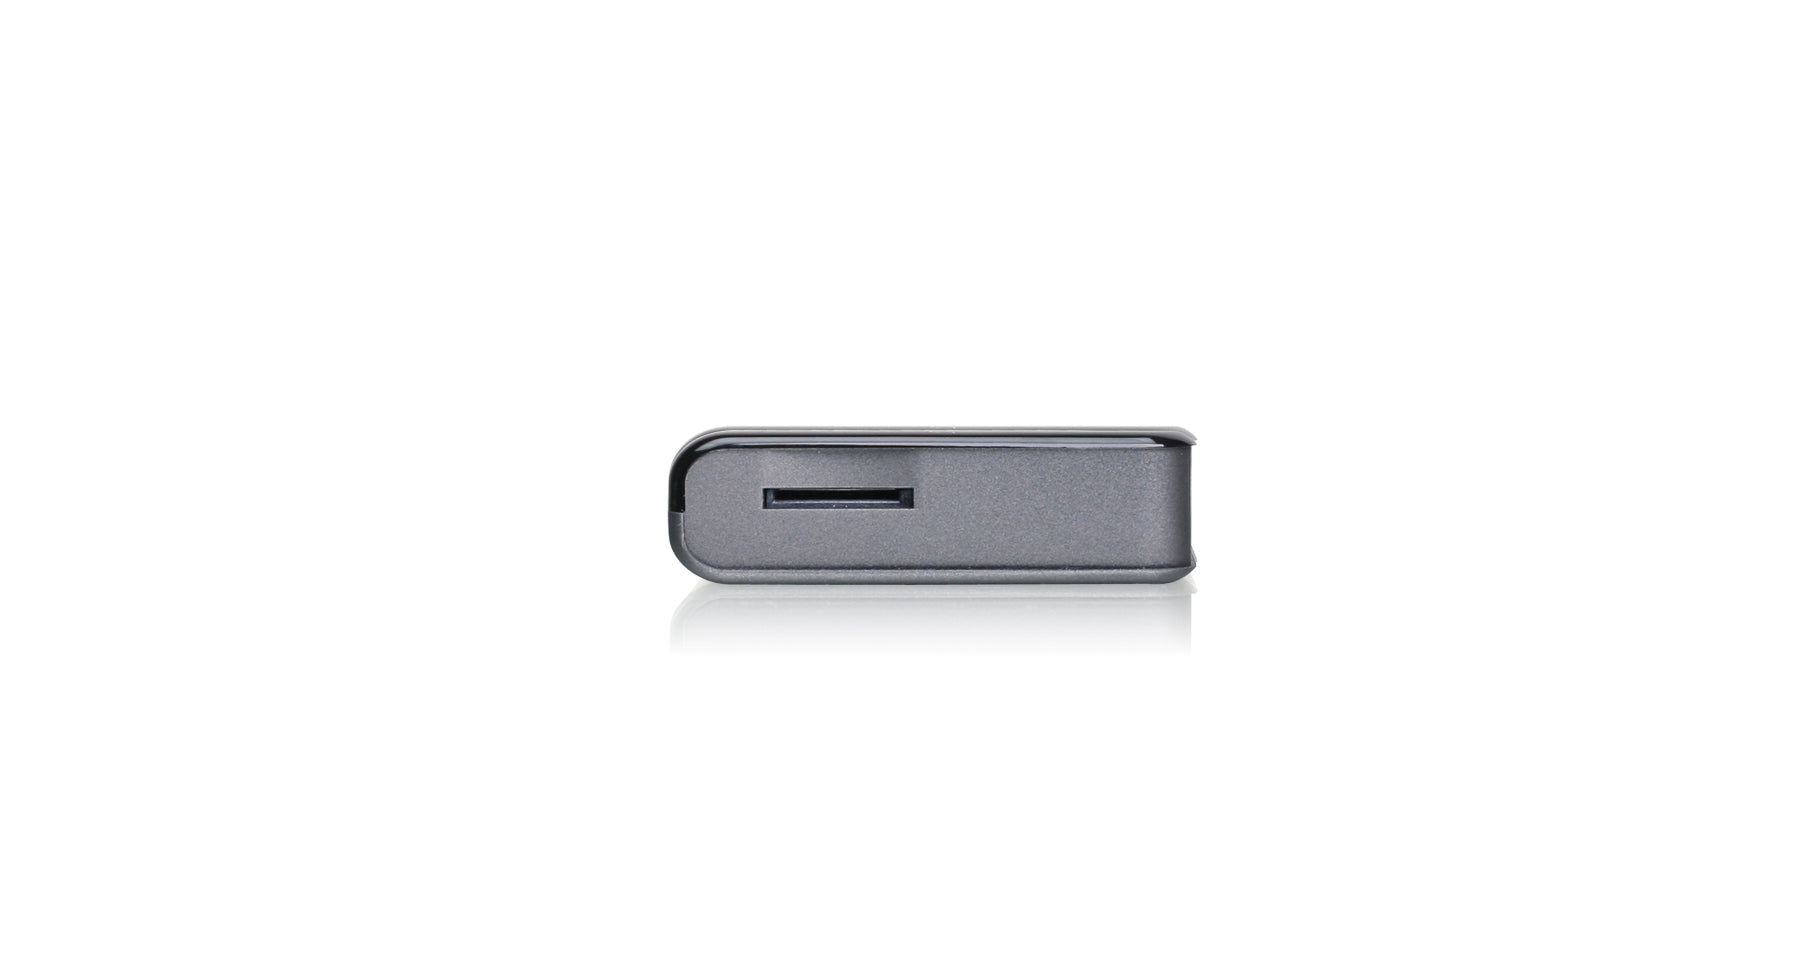 USB 3.0 Compact Flash Memory Card Reader